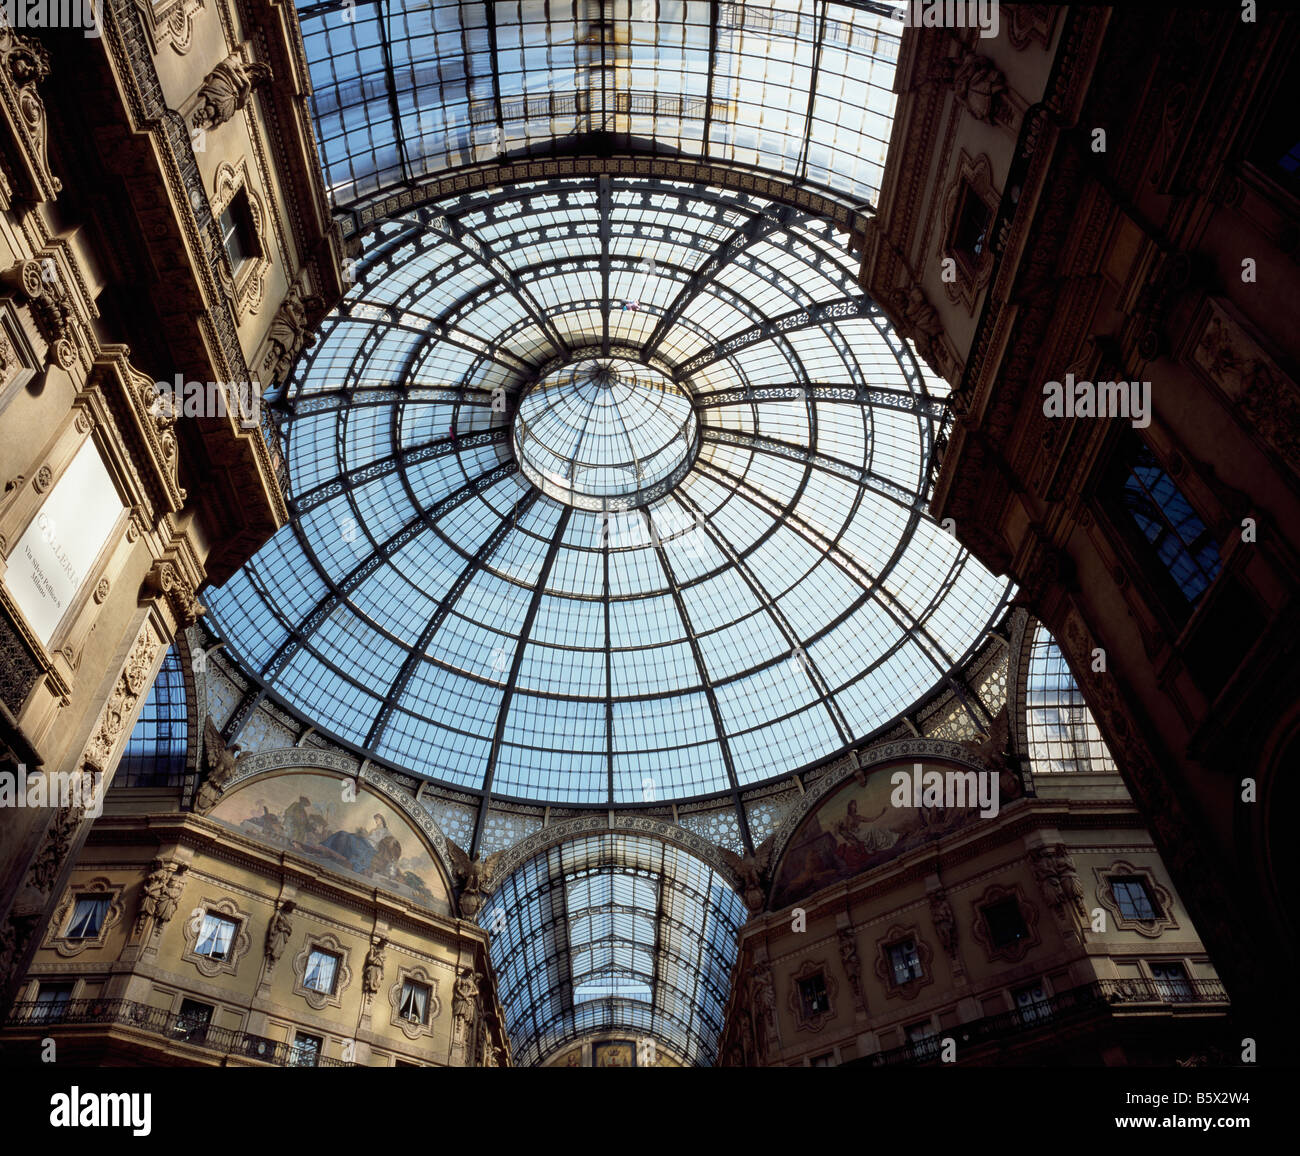 Milan Galleria Vittorio Emanuele Ii Dome Stock Photo